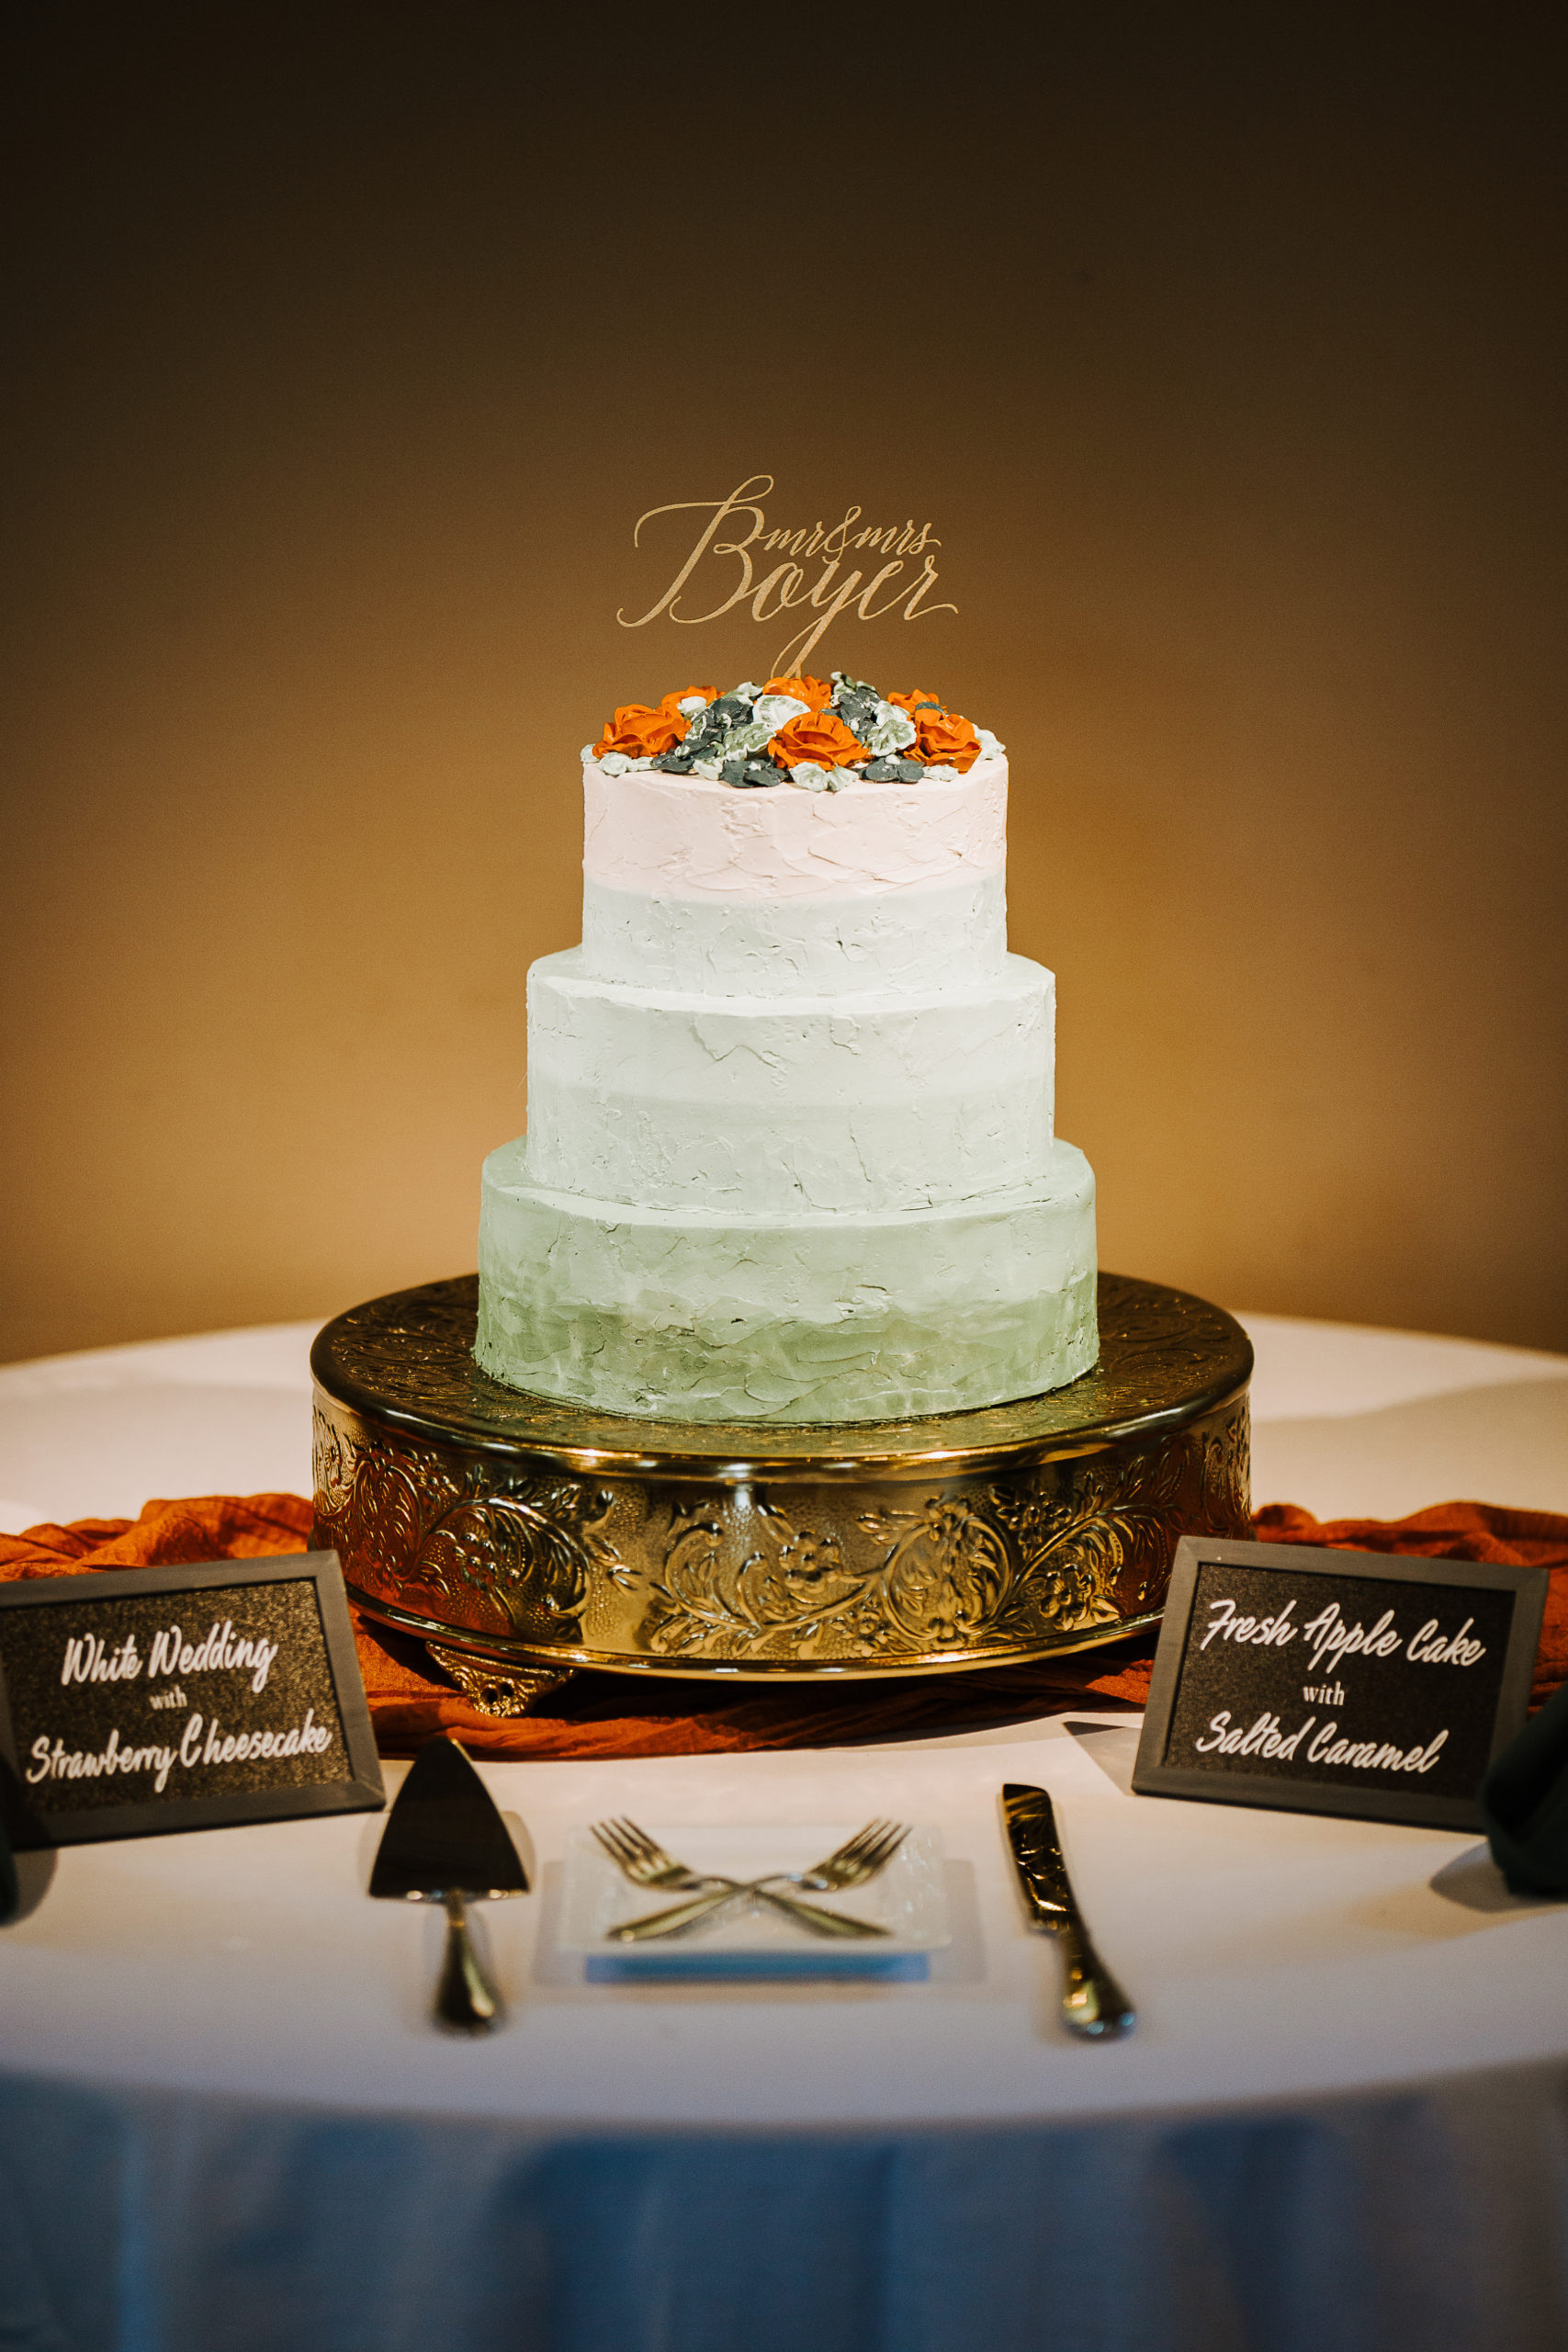 A beautiful 3-tier custom hombre wedding cake from Village Patisserie in Toledo, Ohio